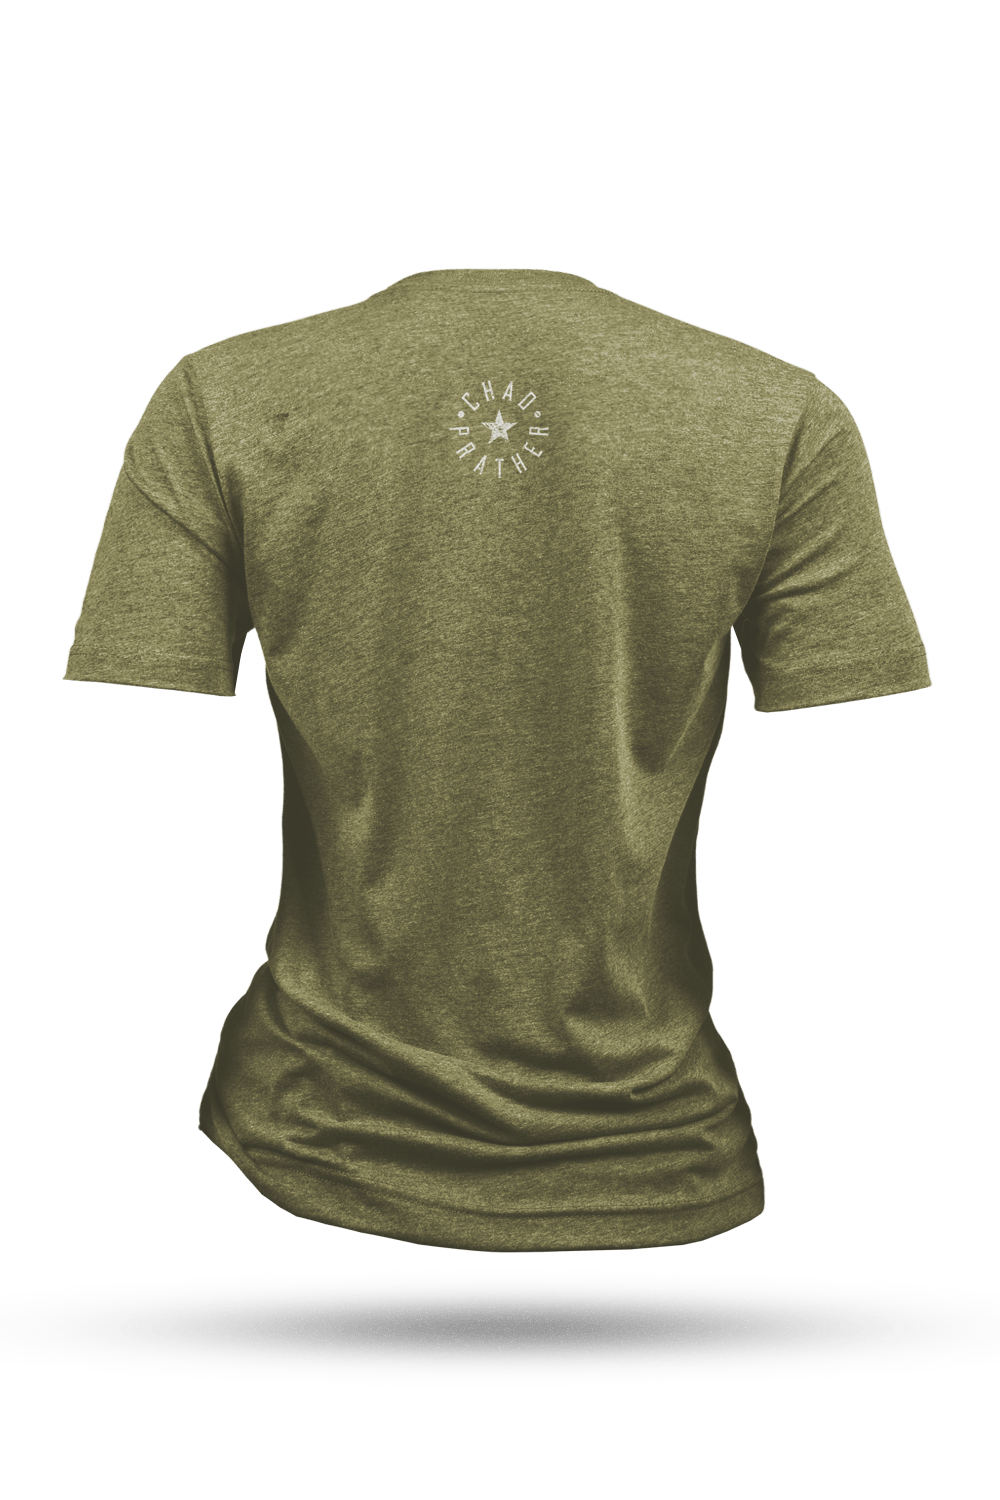 Women's Tri-Blend T-Shirt - Chad Prather - 1776 Stars and Stripes - Nine Line Apparel